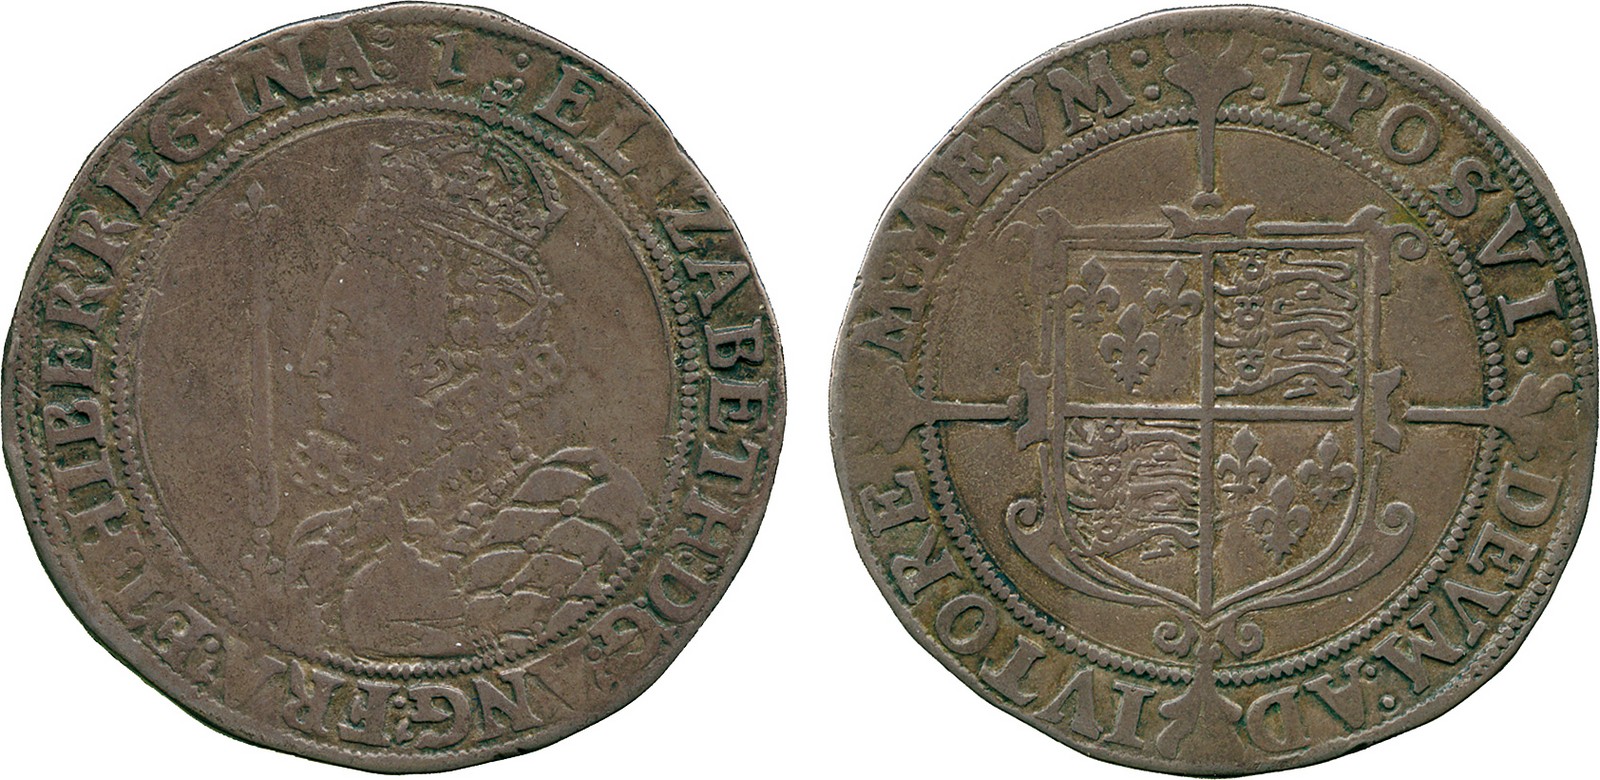 BRITISH COINS, Elizabeth I, Silver Halfcrown, seventh issue (1601-1602), crowned bust left in